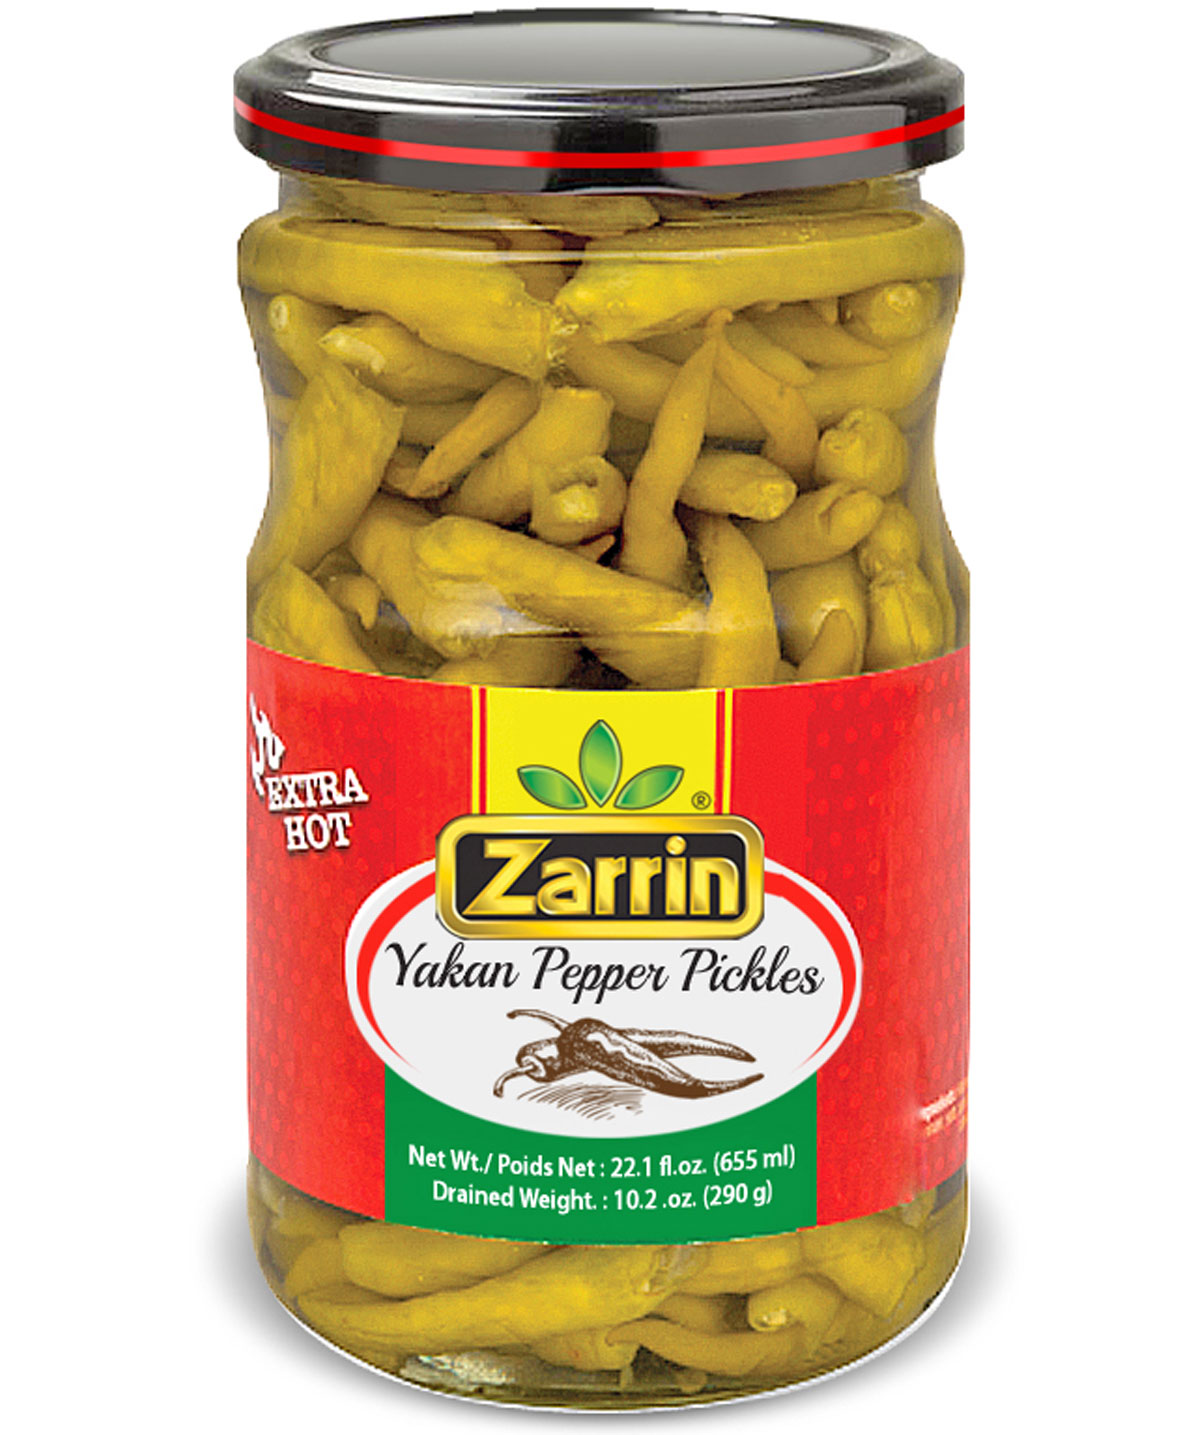 Zarrin Hot Yakan Pepper Pickles In Glass Jar